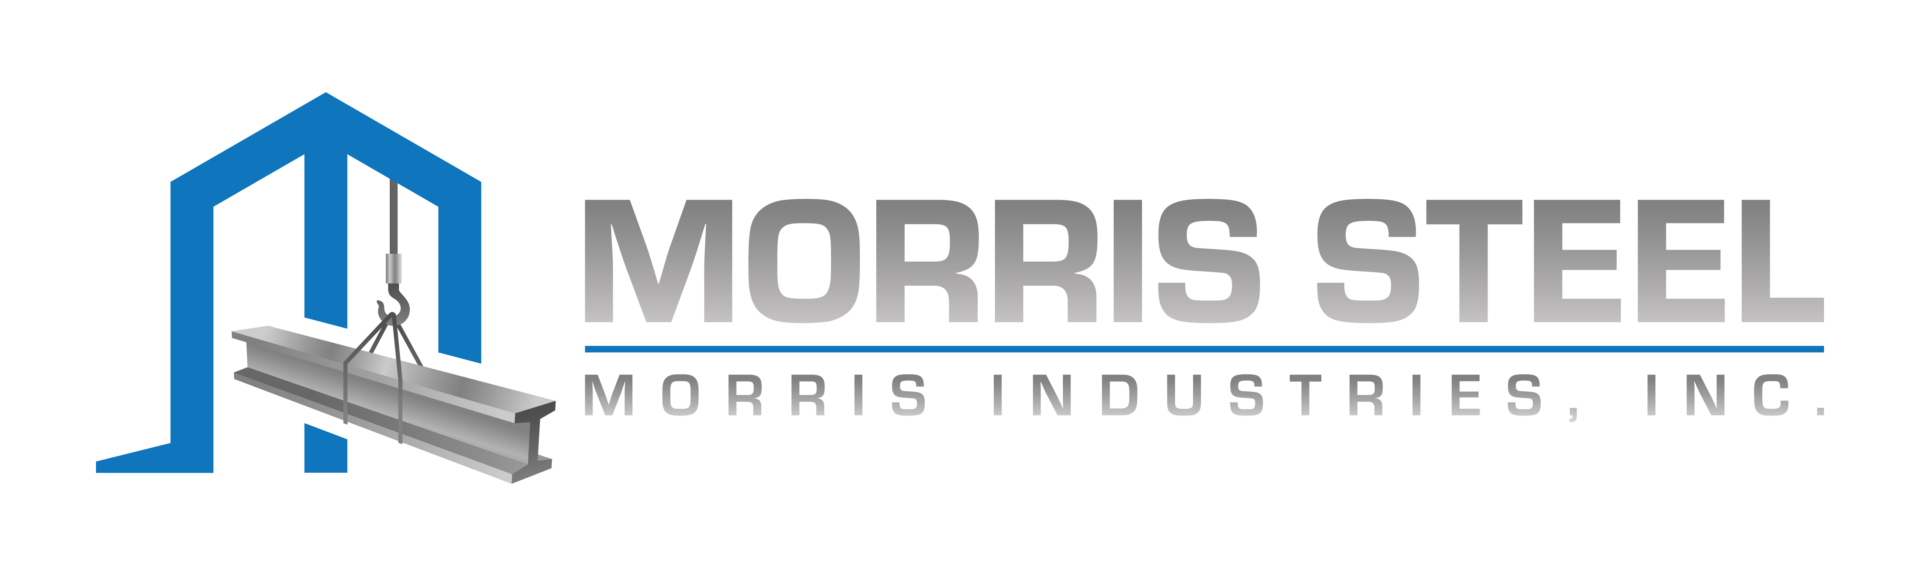 Morris Steel Horizontal Blue Light Text